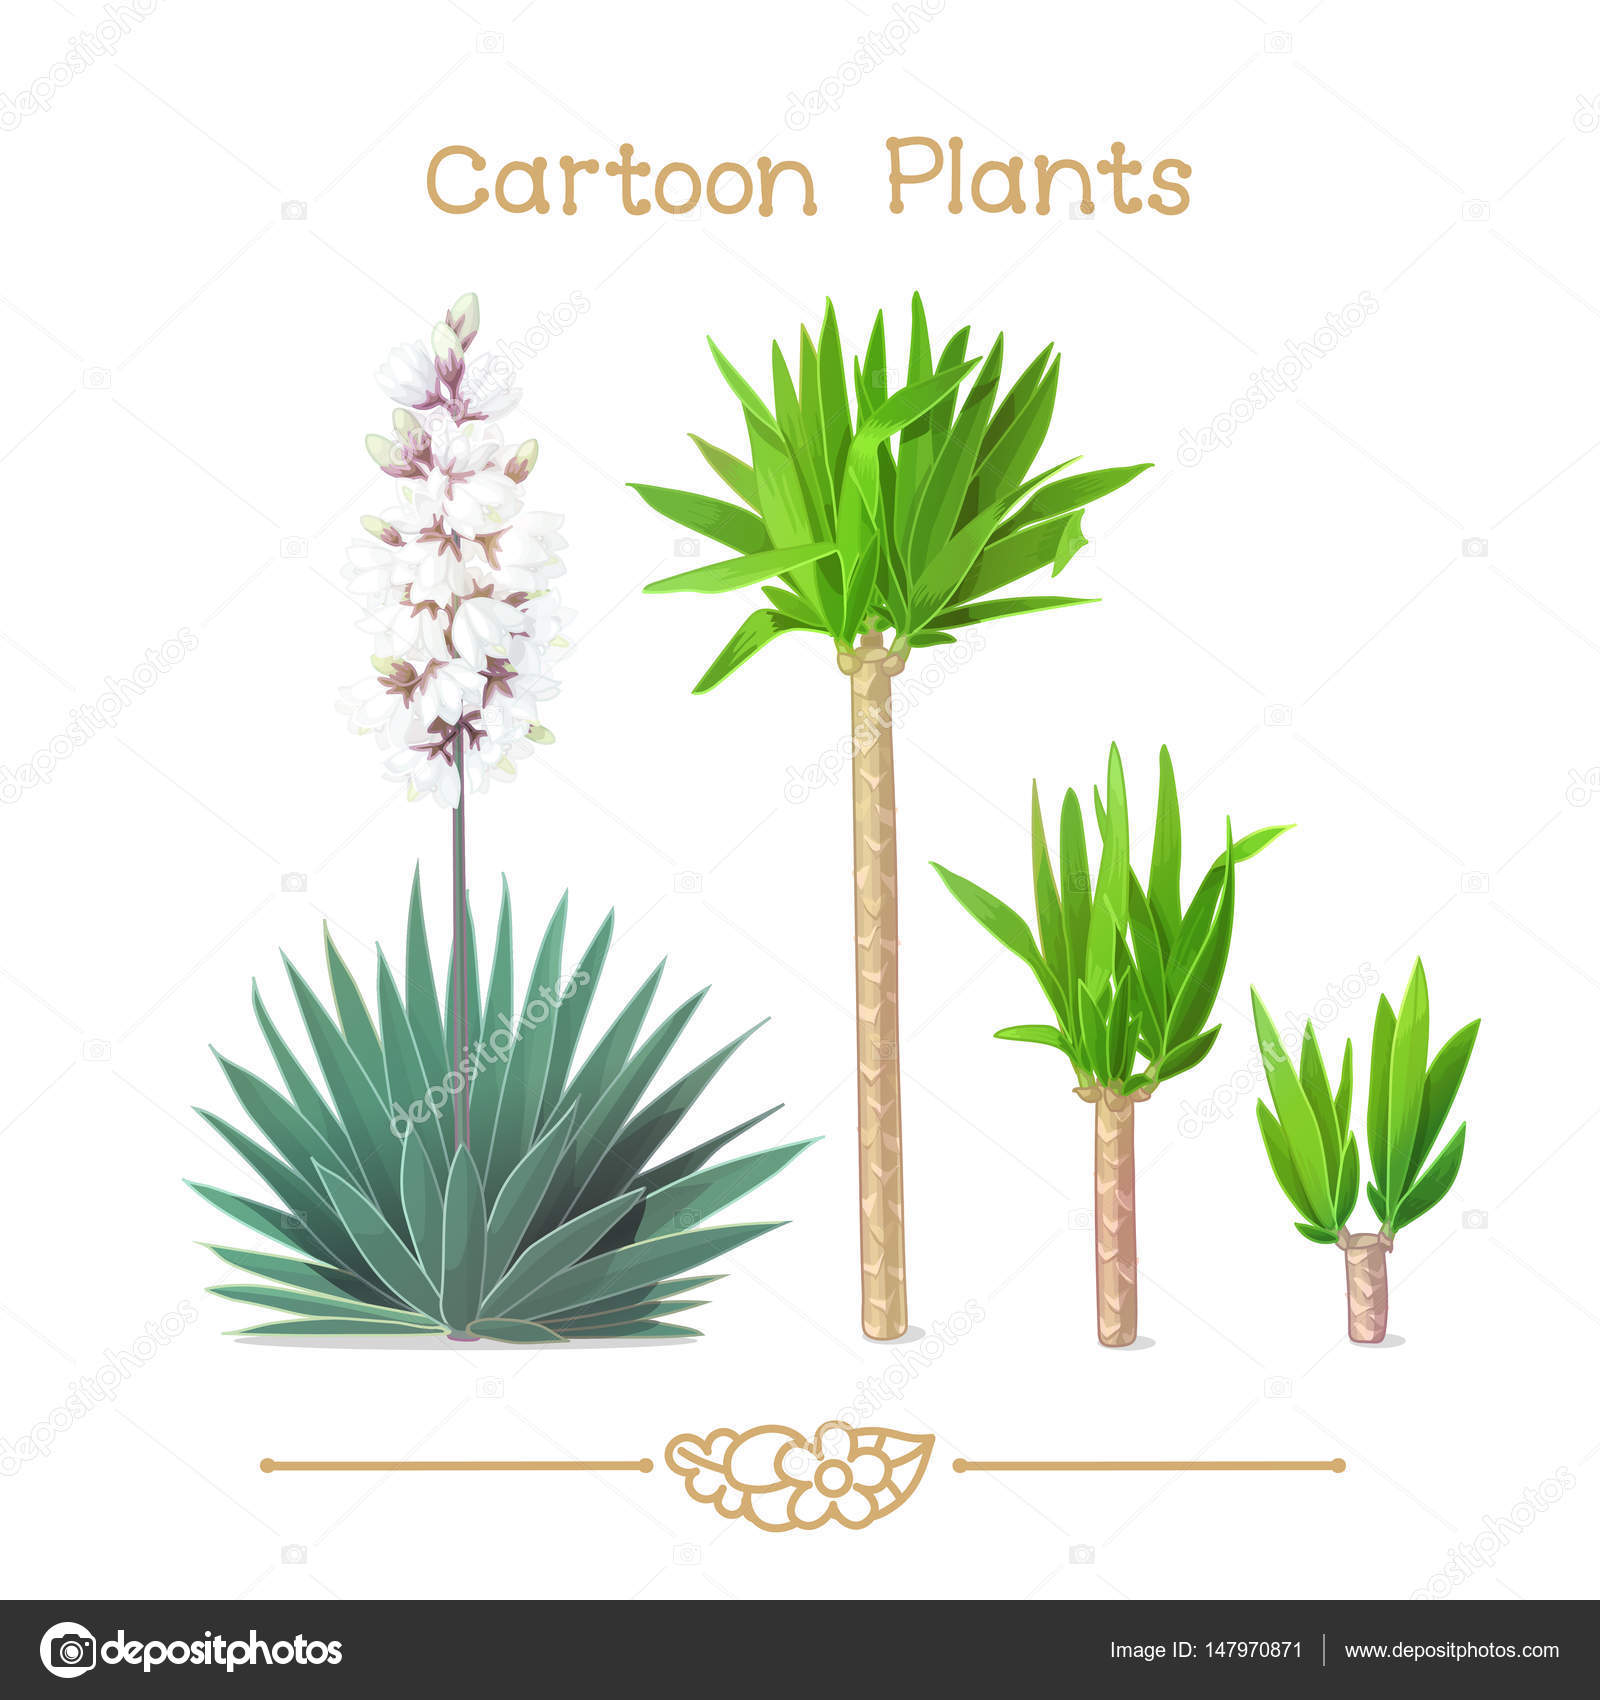 Clipart Yucca Plantae Series Cartoon Plants Blooming Yucca Stock Vector C Vetra Kori 147970871